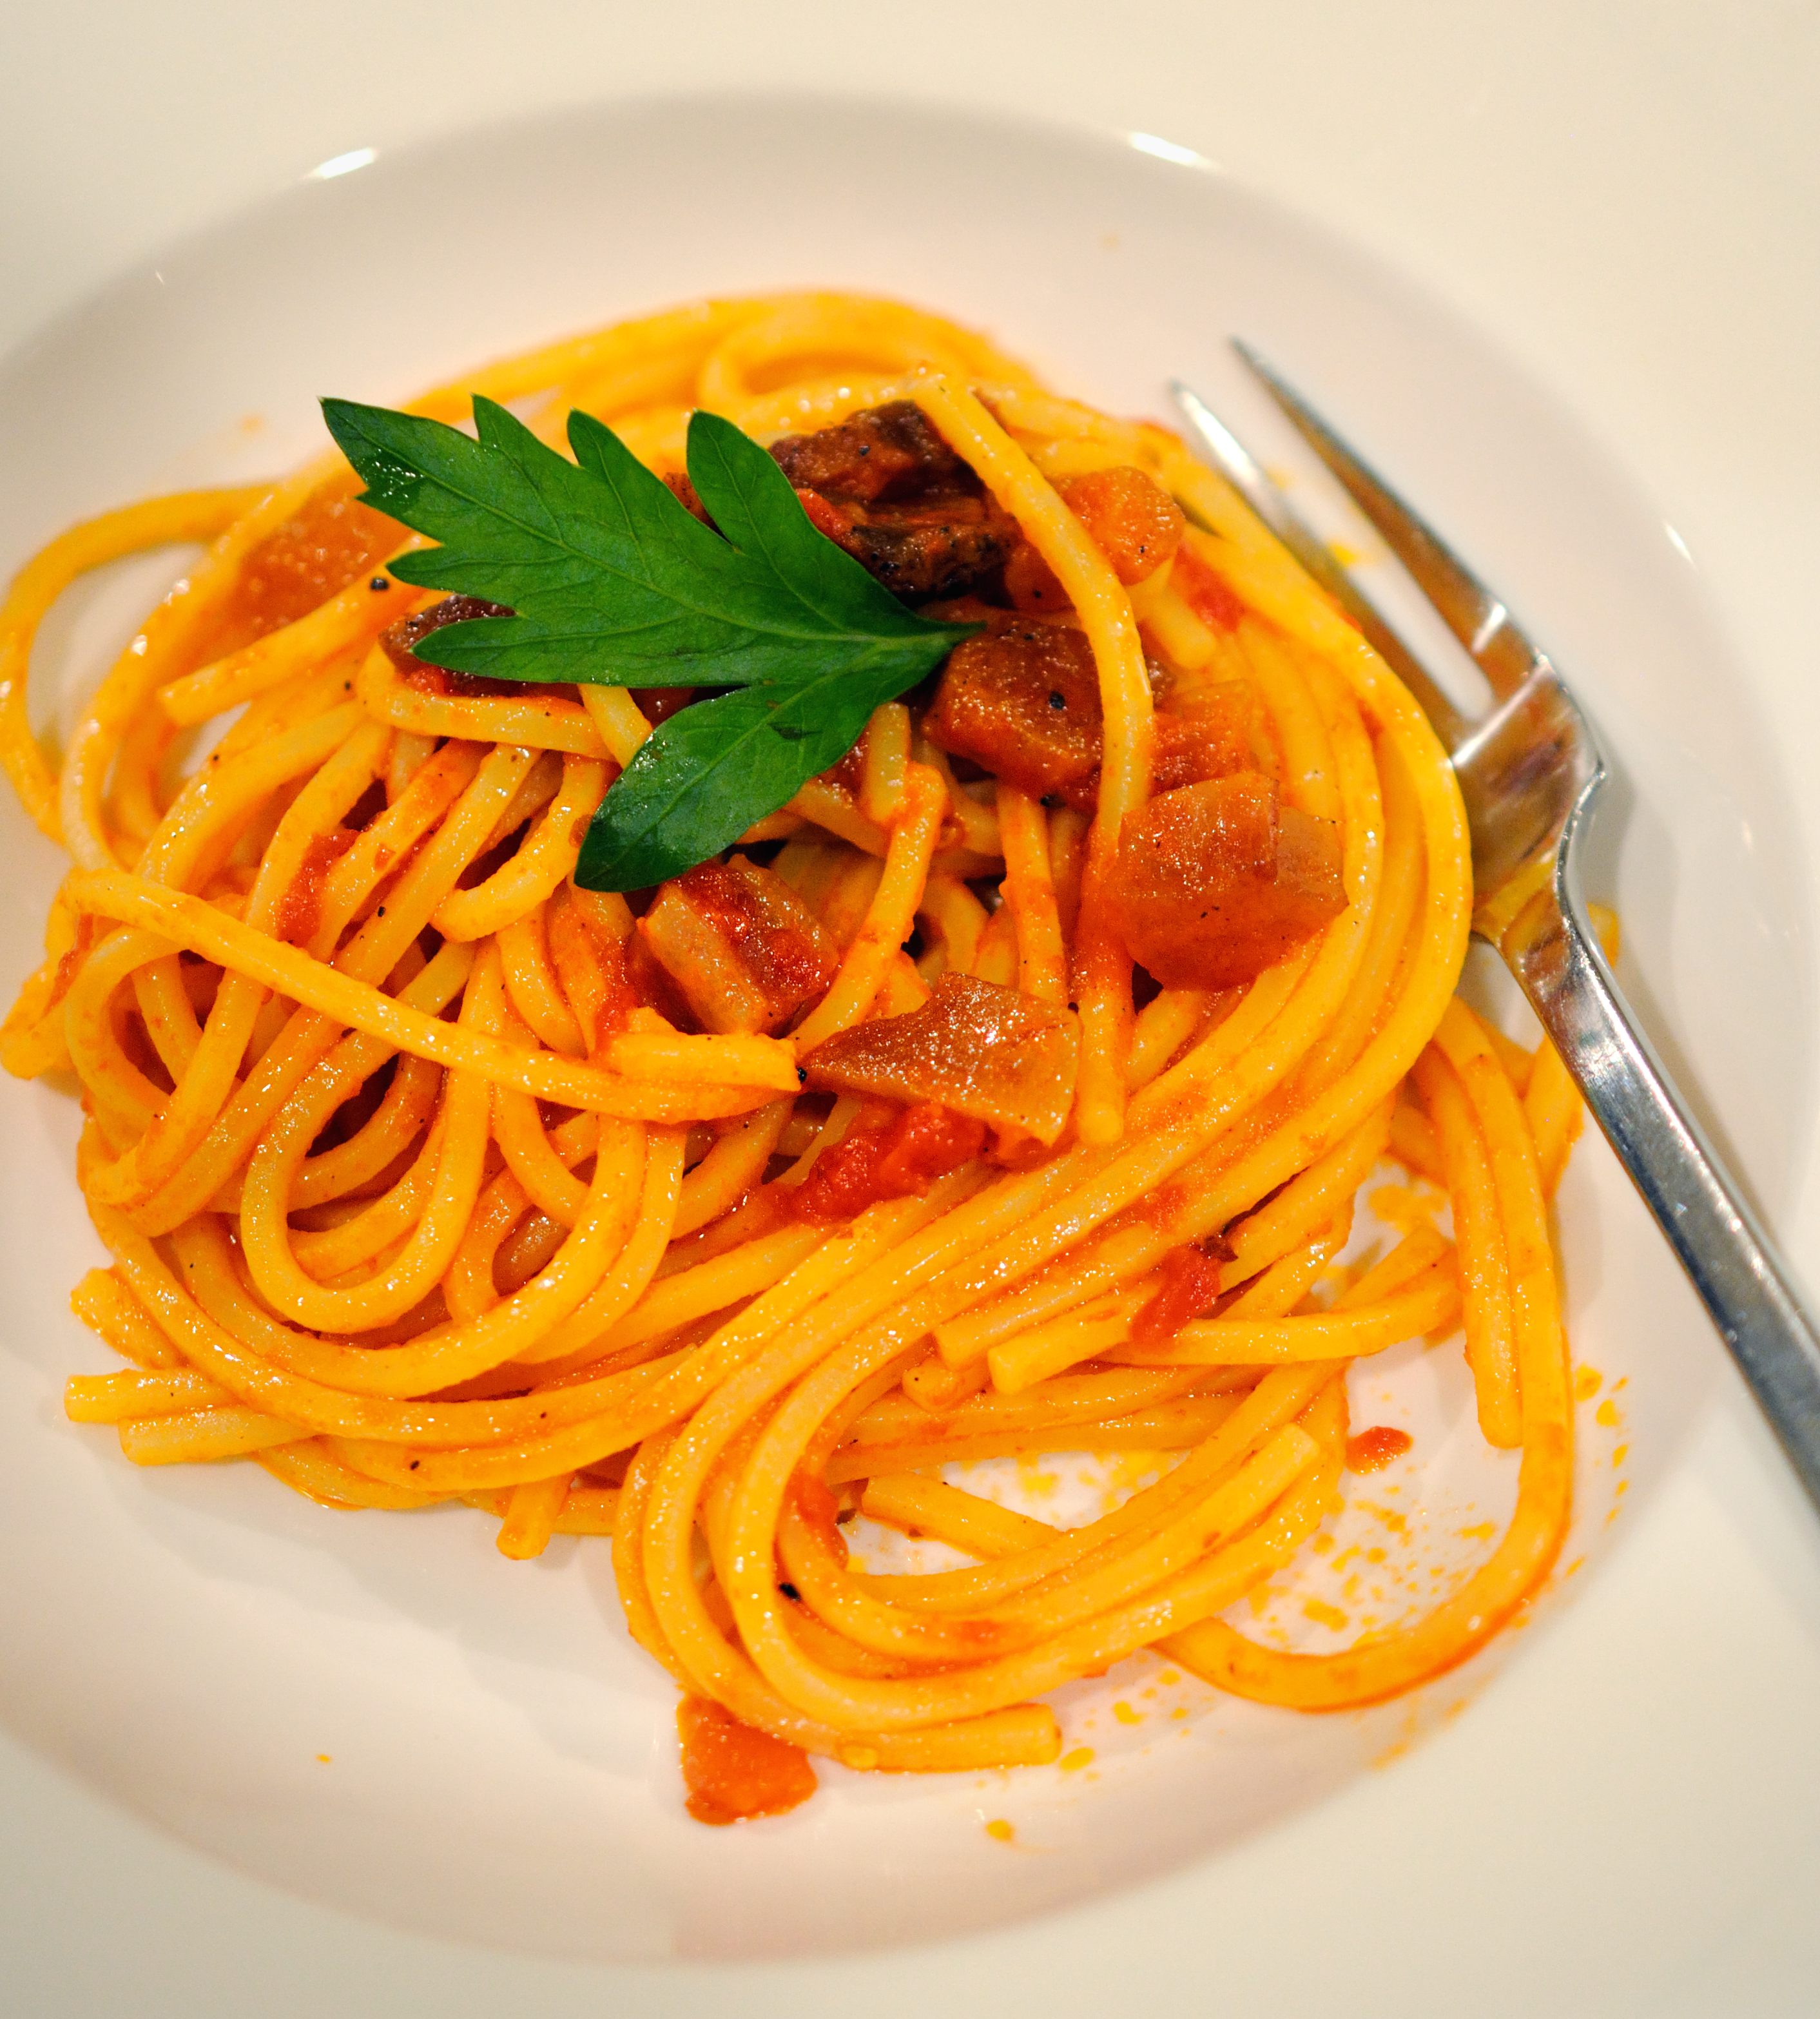 Spaghetti La Matriciana with Parsley Leaf